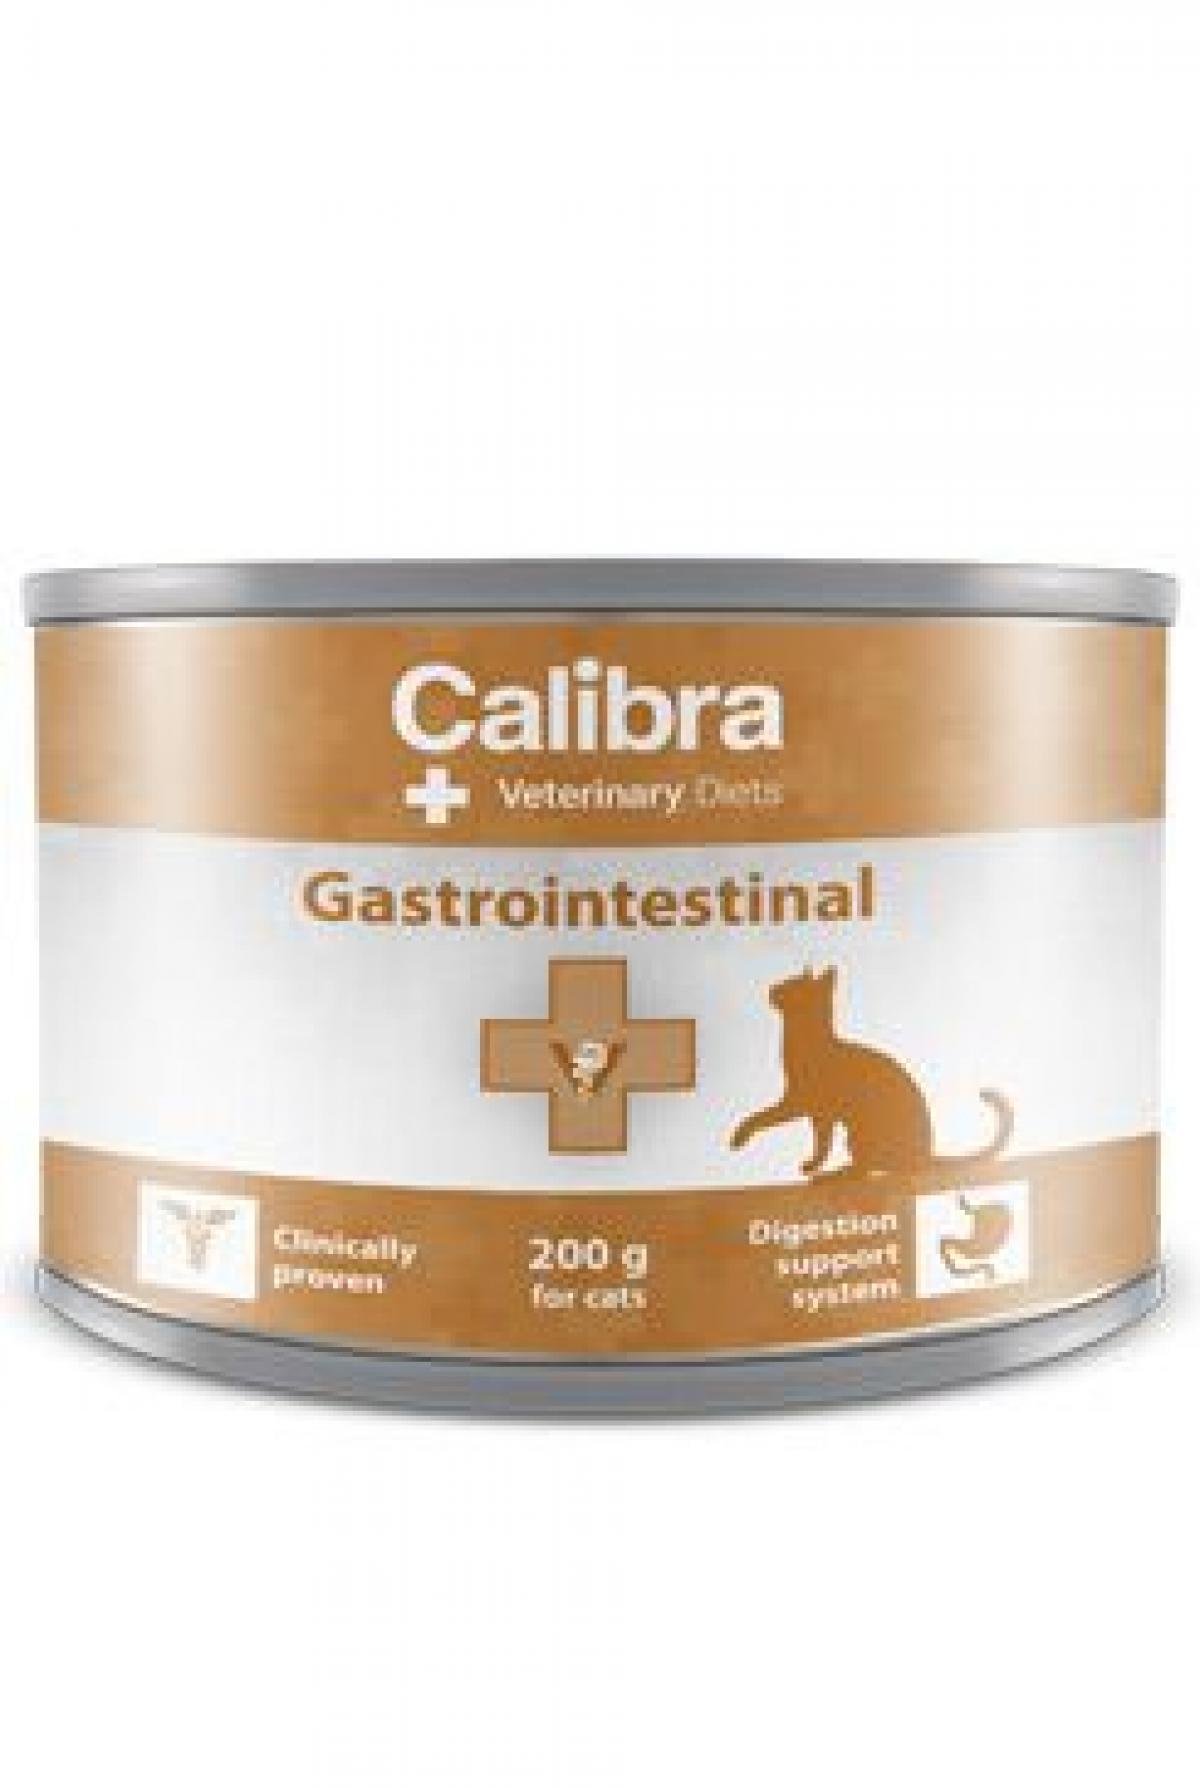 Calibra VD Cat Gastrointestinal konz. 200g